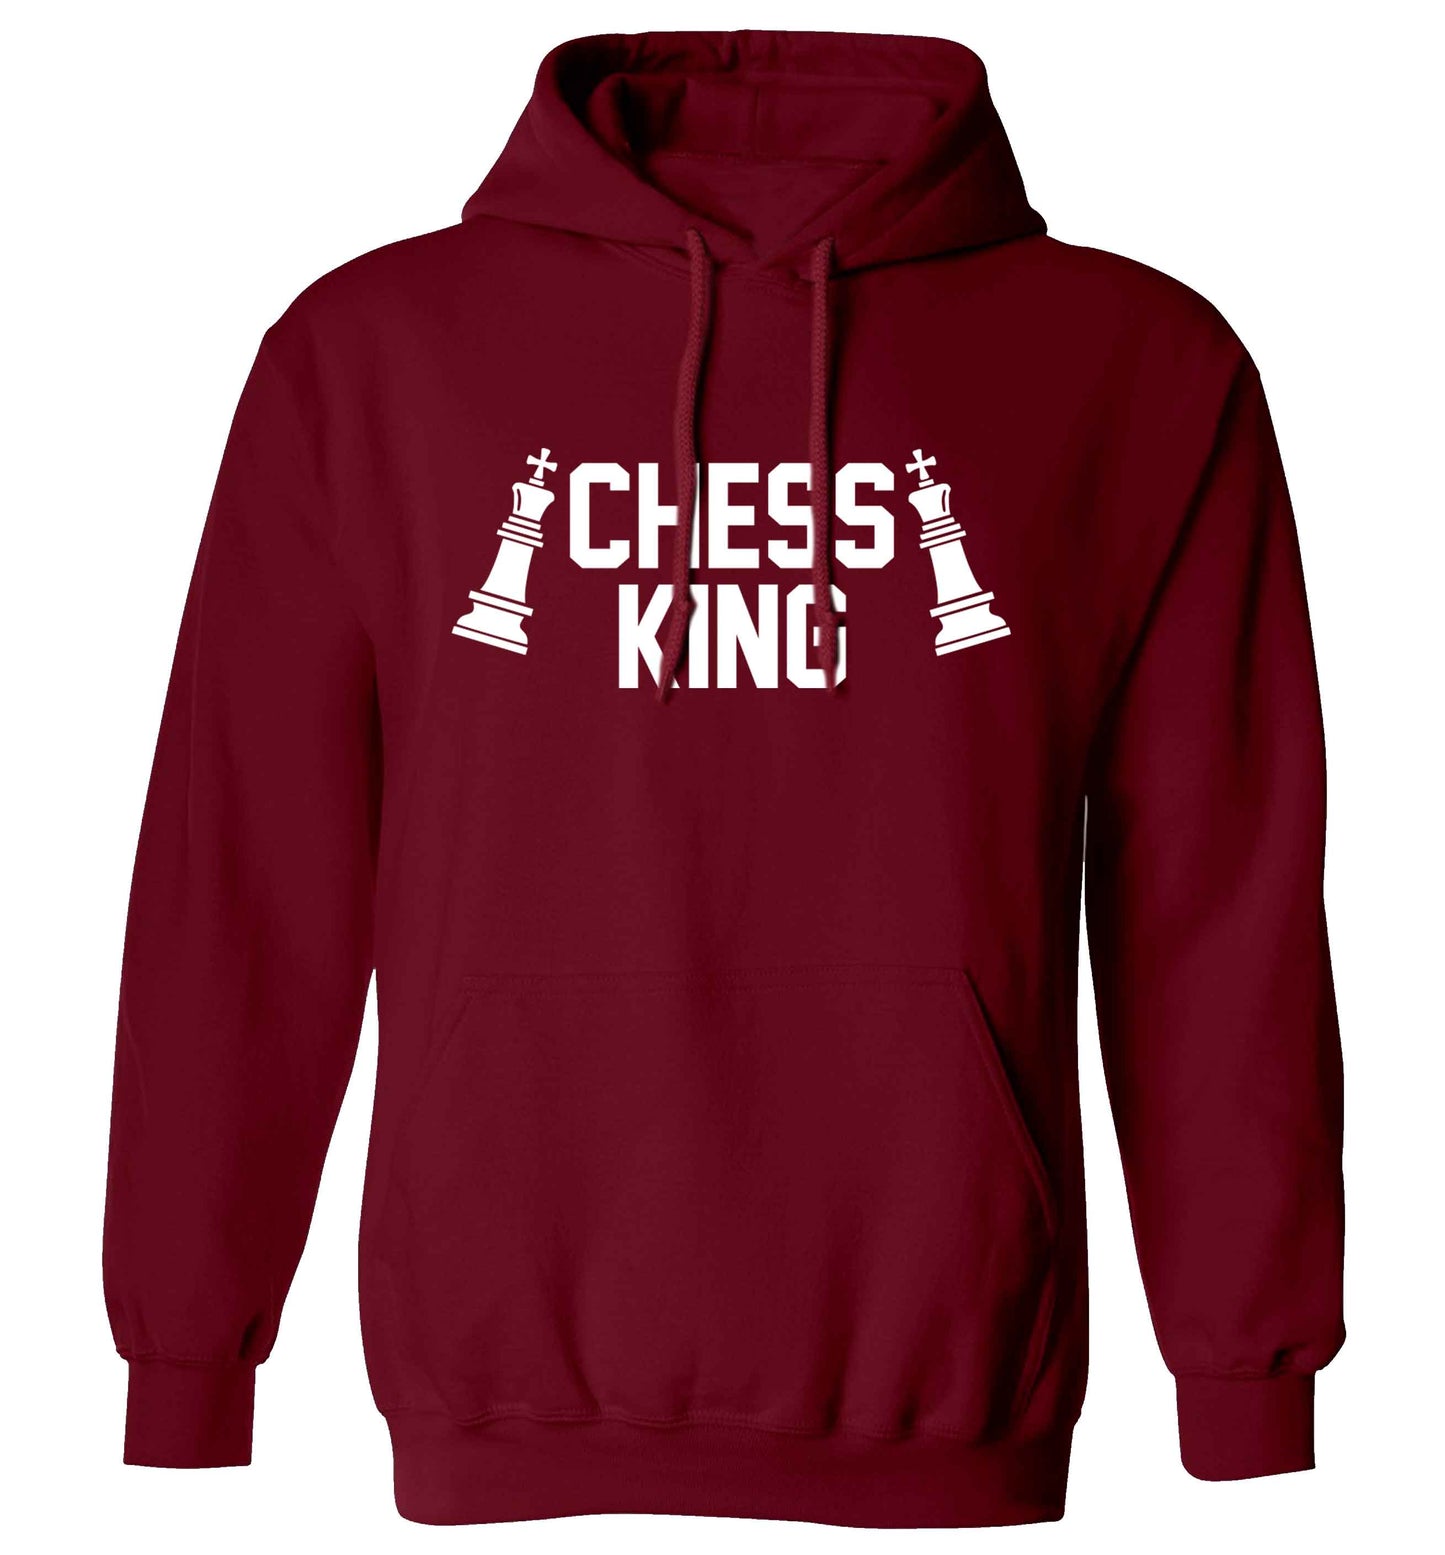 Chess king adults unisex maroon hoodie 2XL